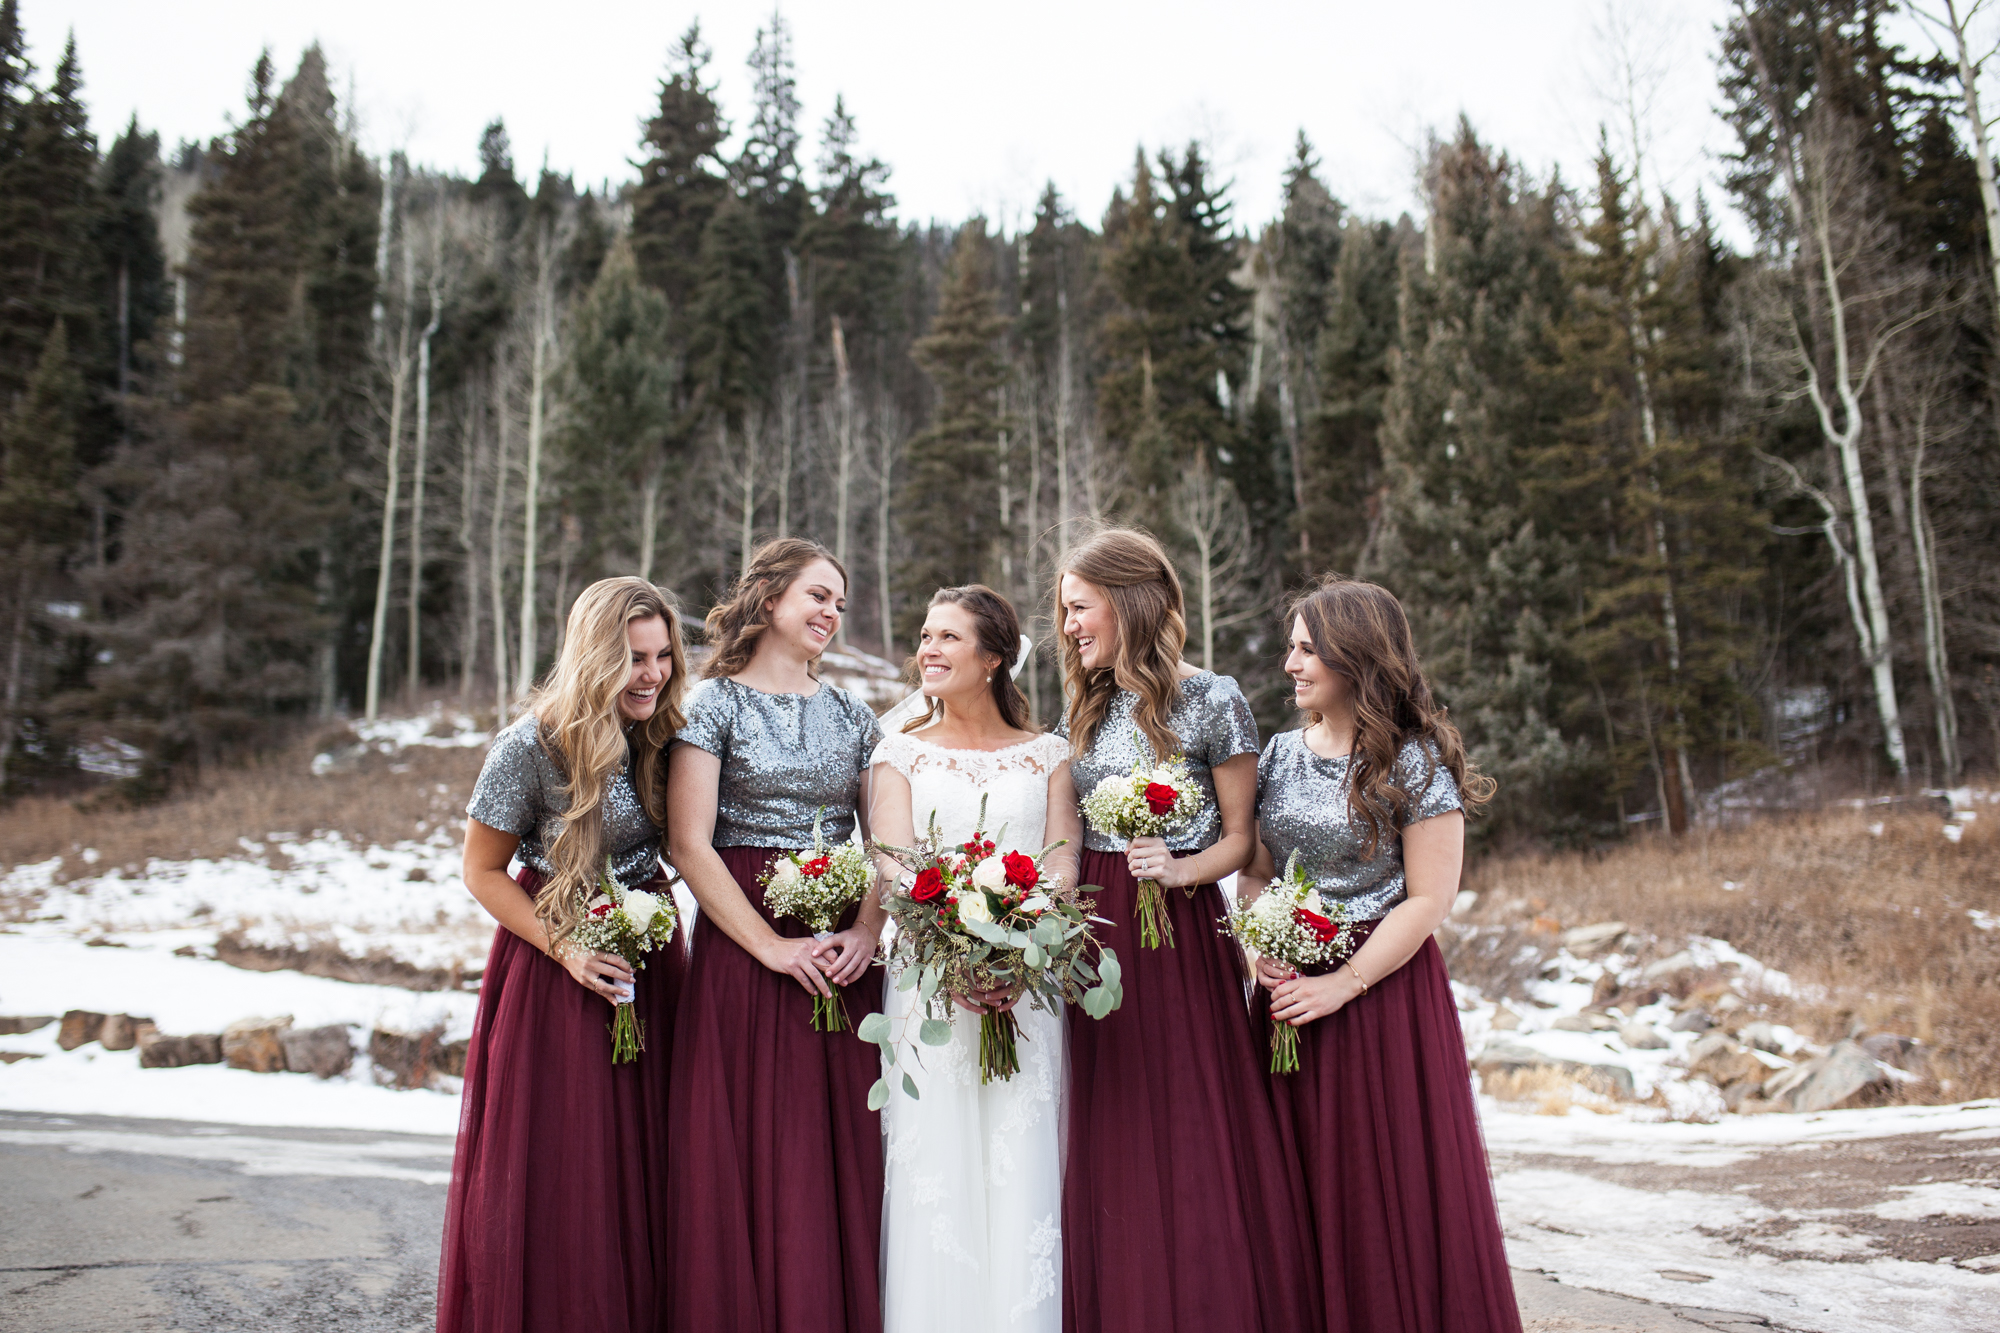 maroon and sequins bridesmaids dresses for winter wedding ideas, durango colorado winter wedding inspiration, laughing bridesmaids